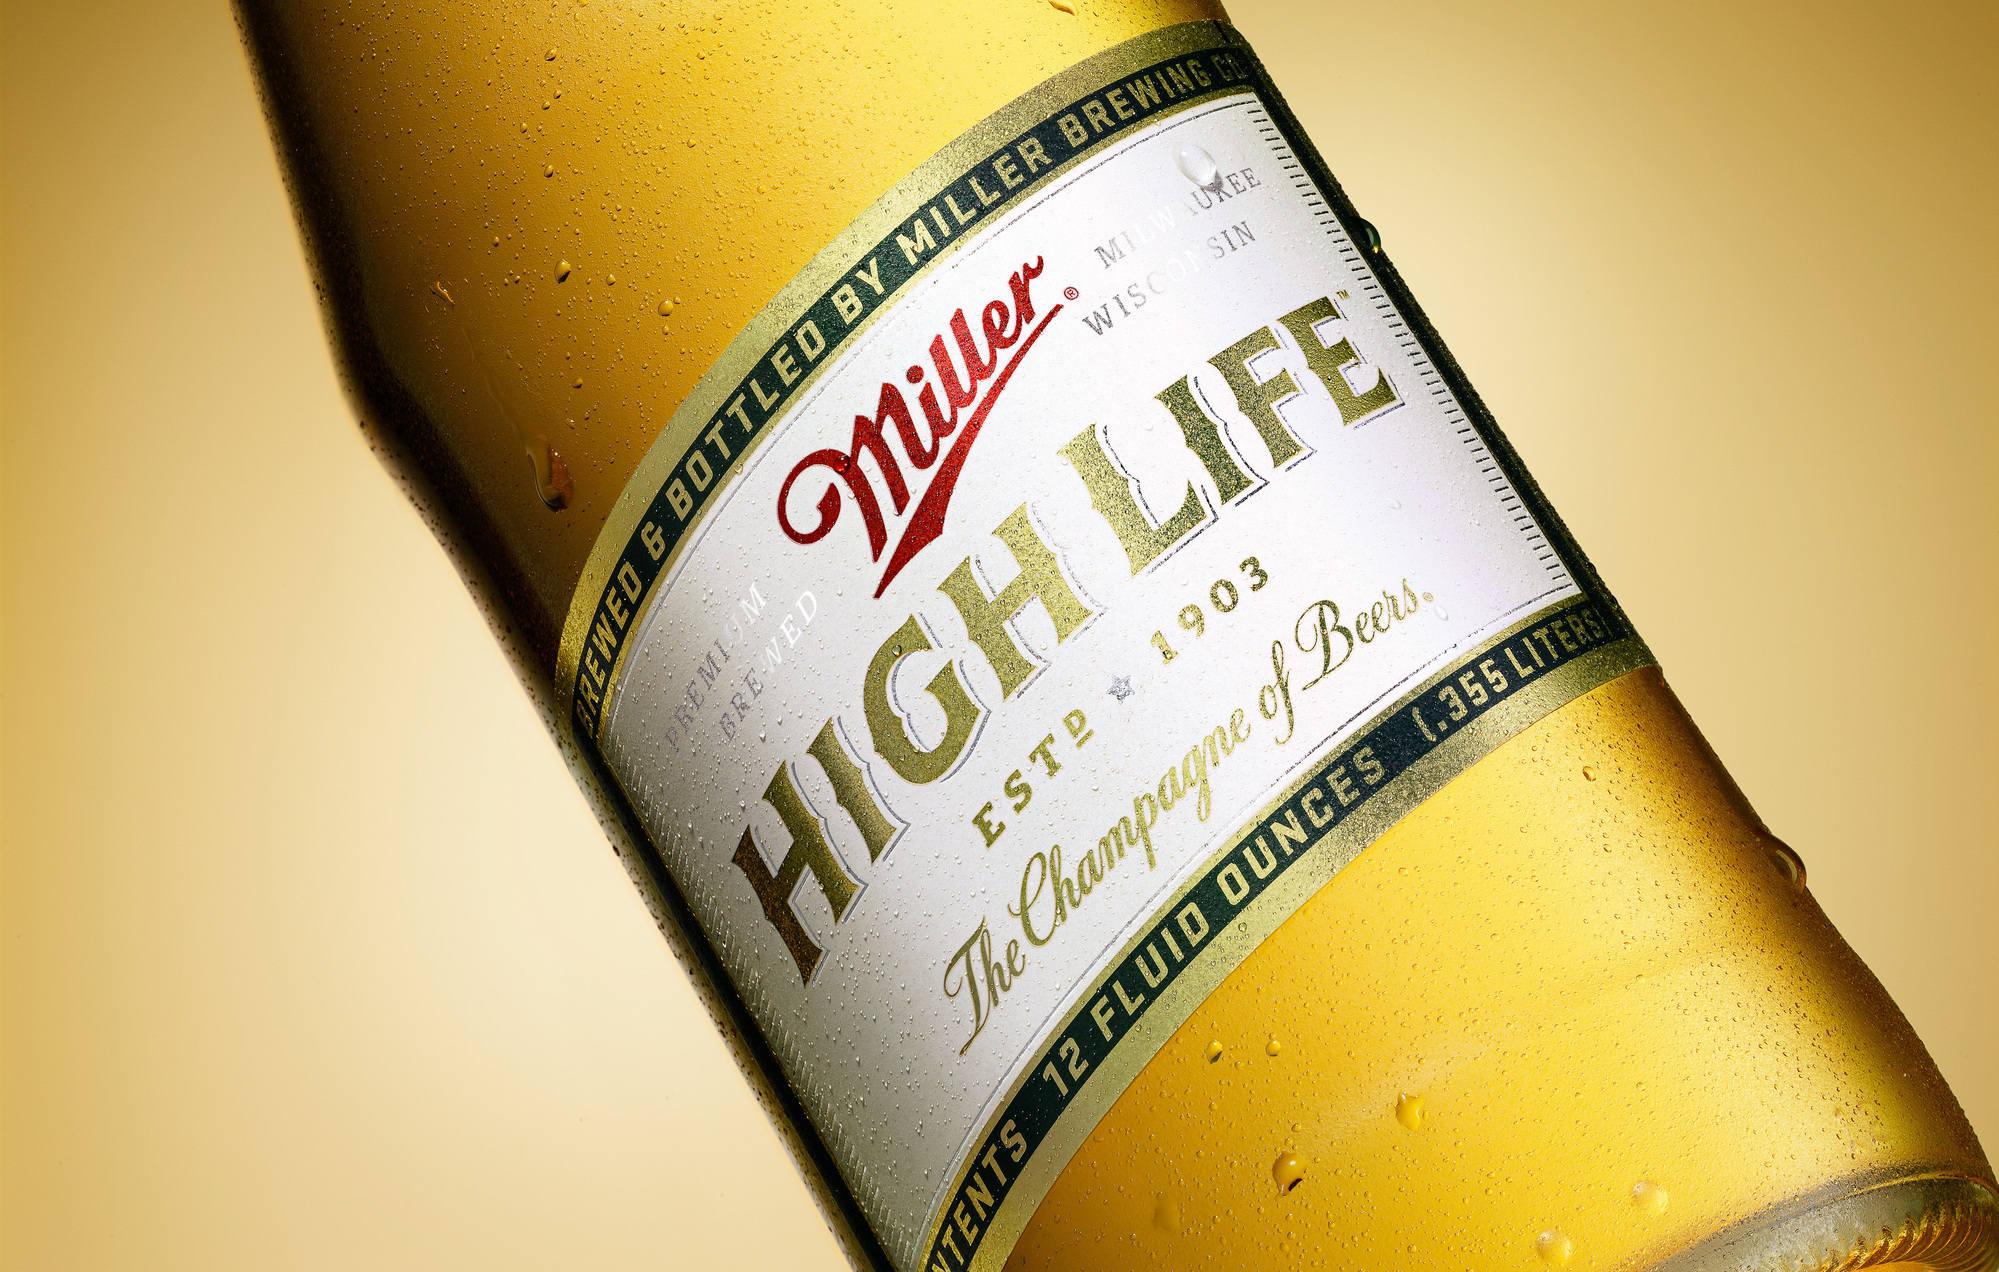 Miller High Life beer bottle by beverage product photographer Timothy Hogan